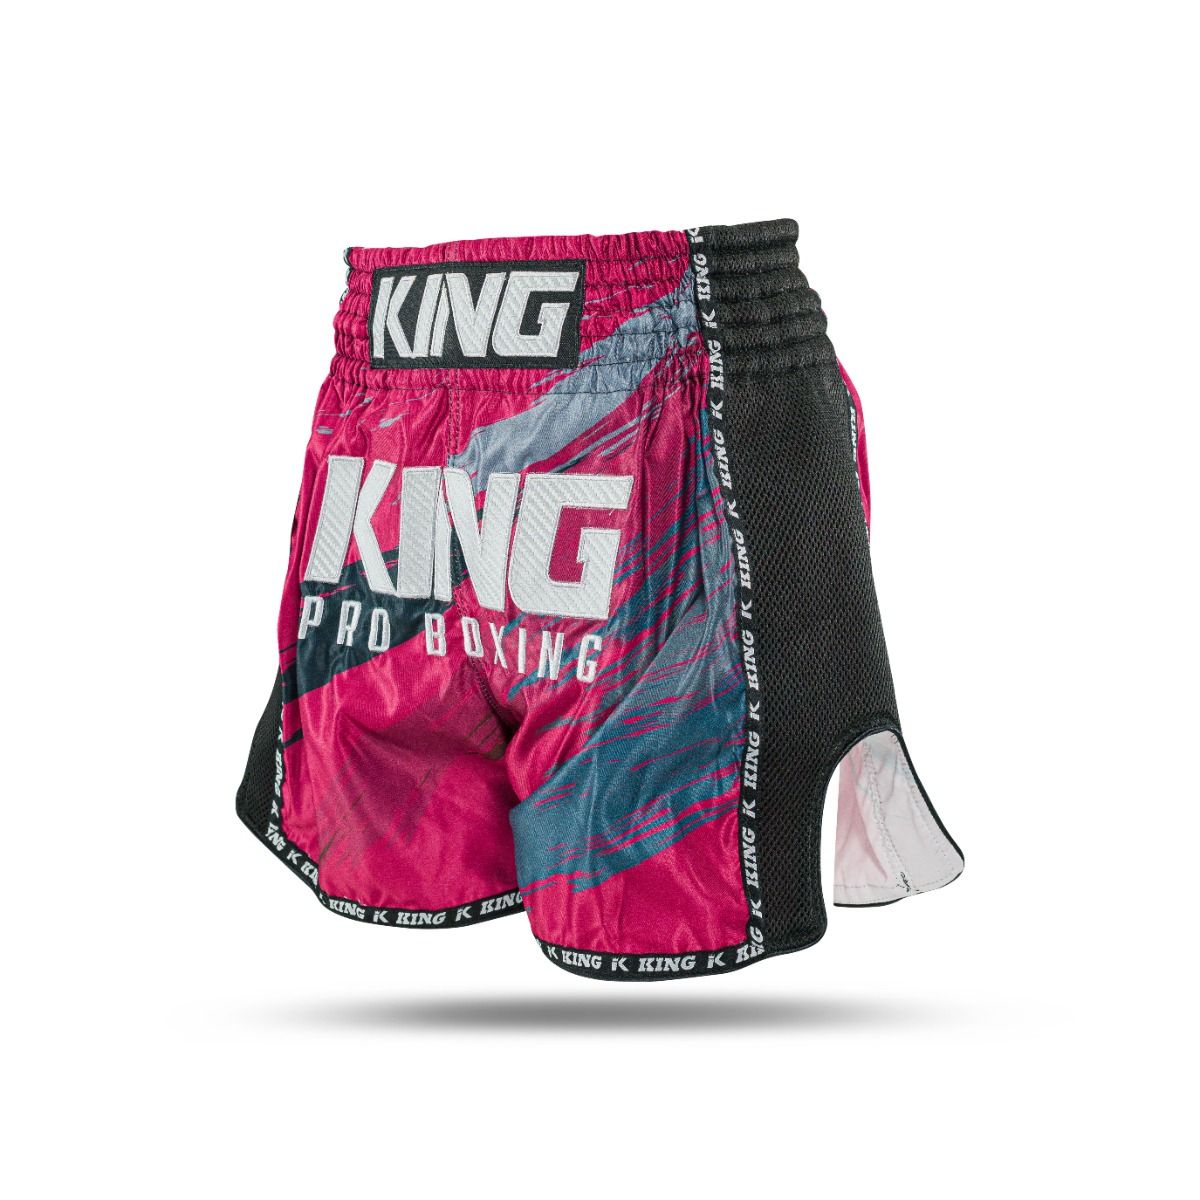 King PRO boxing muay Thai trunk - KPB STORM 3